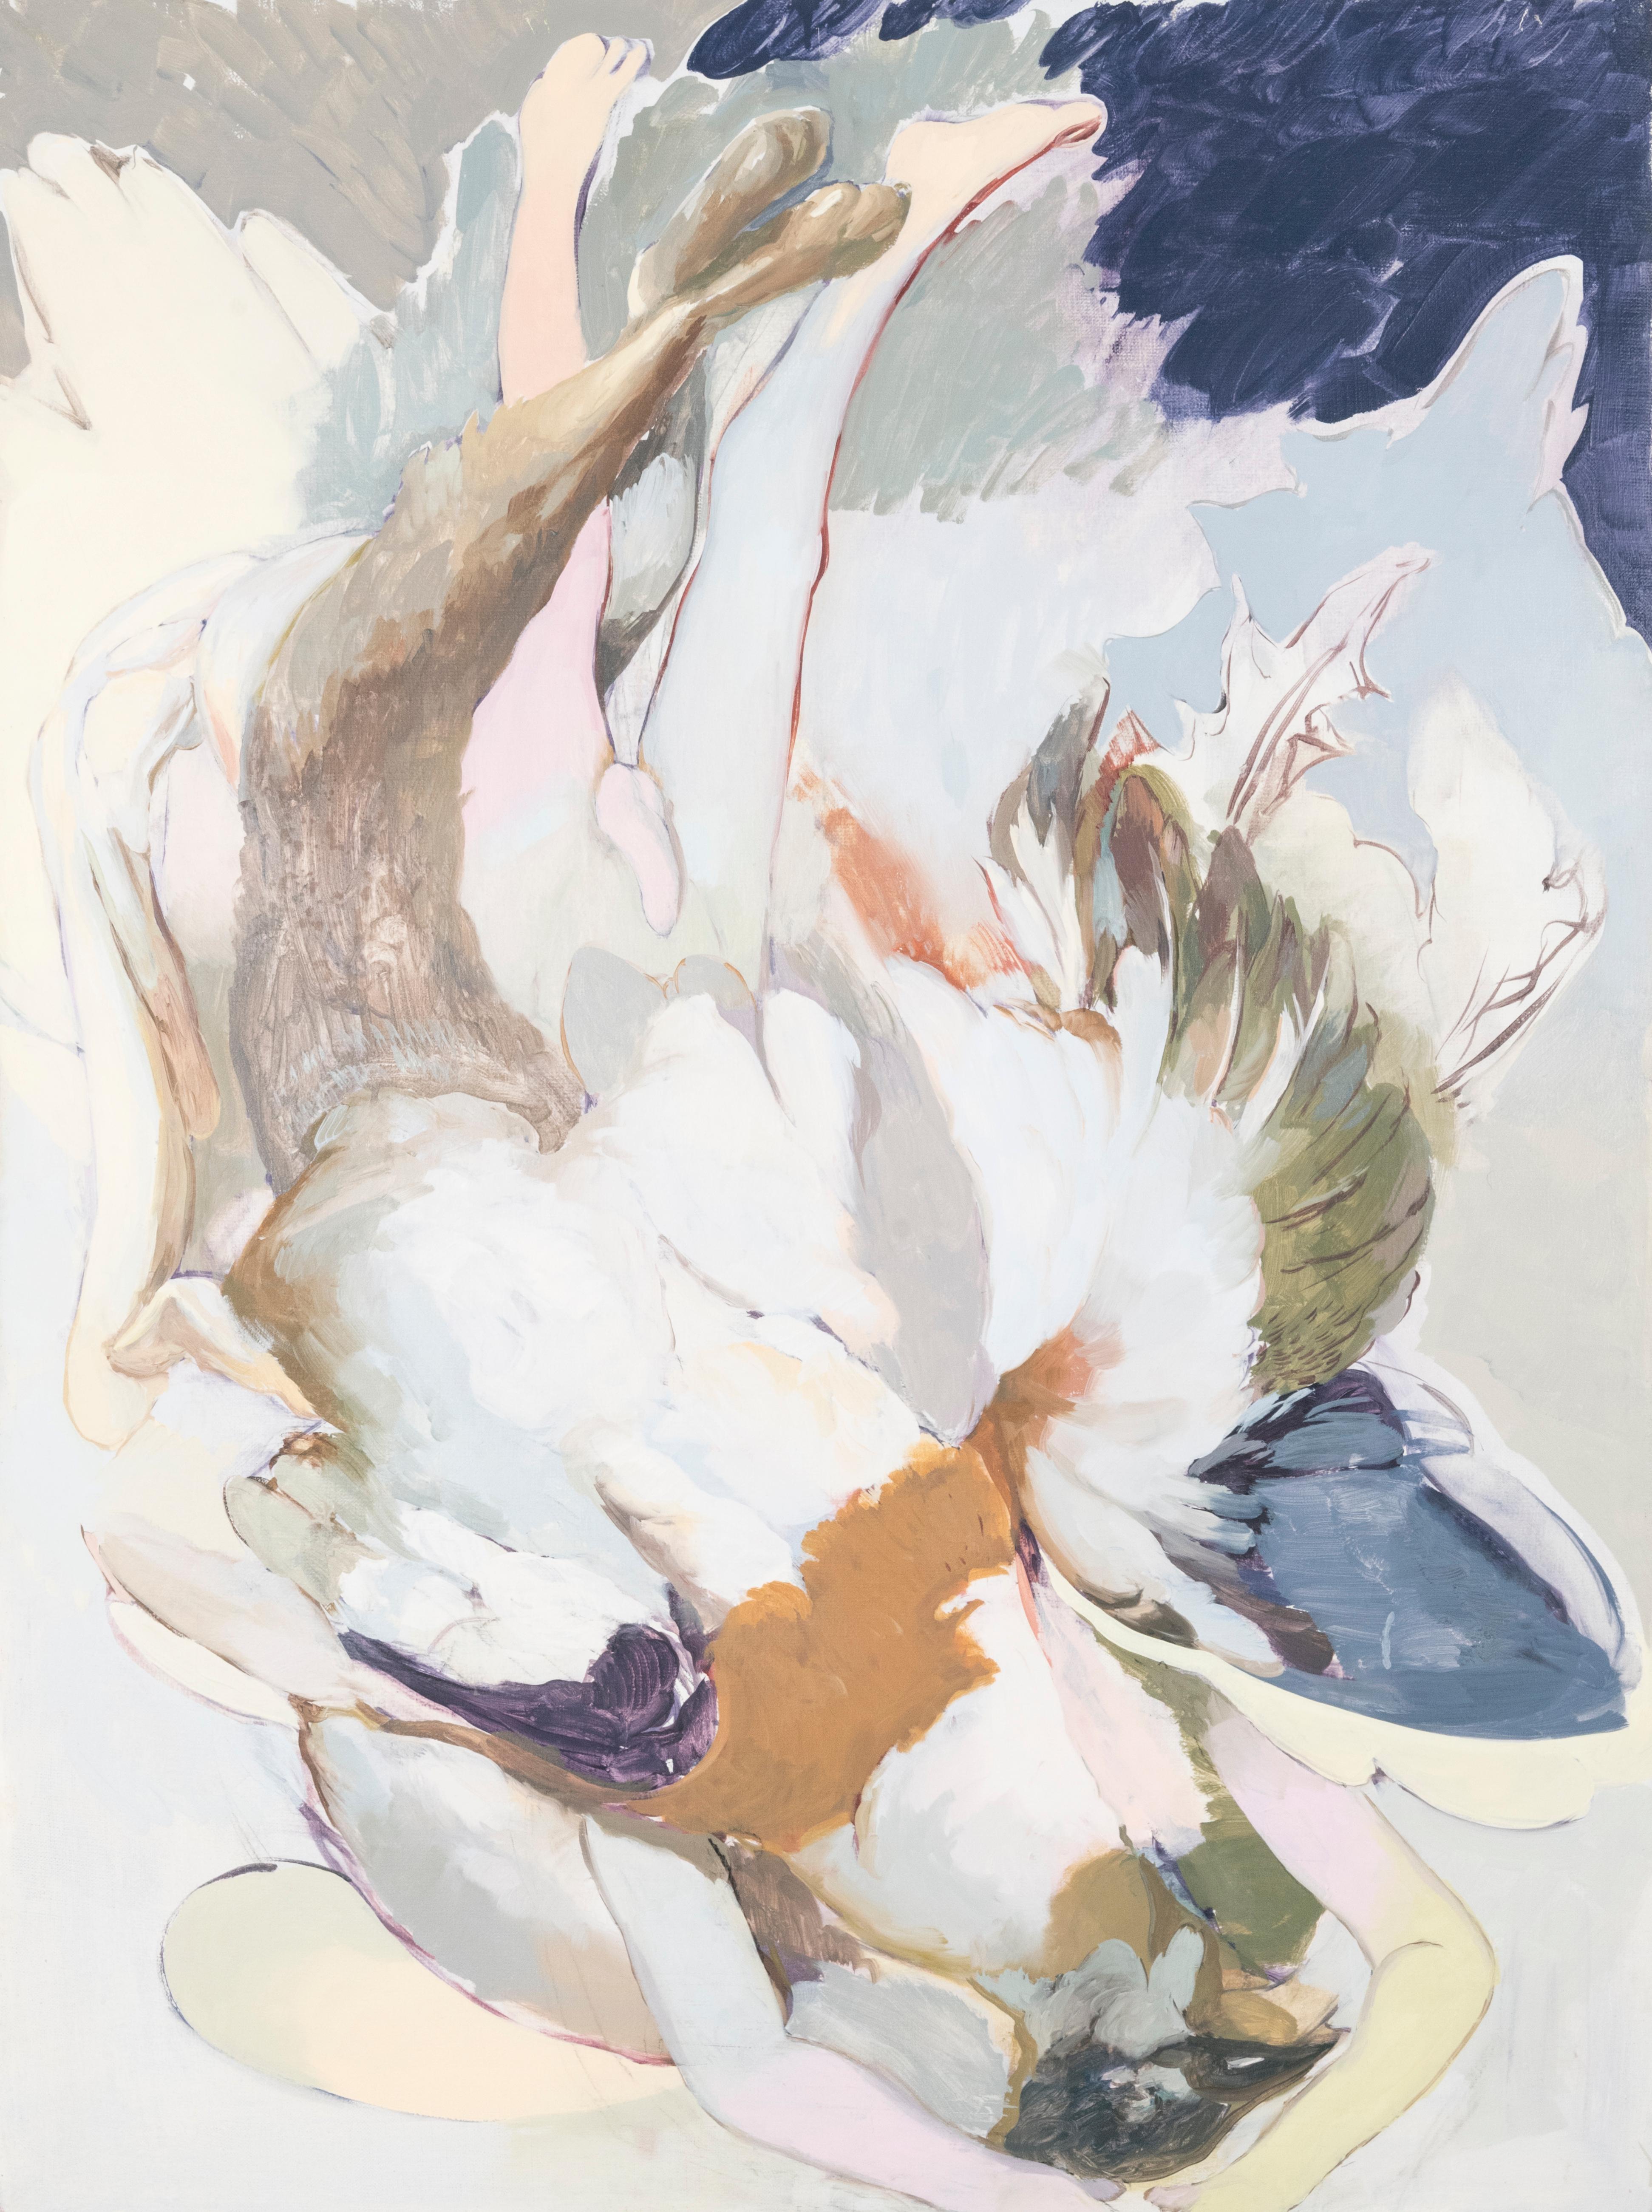 "Panejos y cojaros con alas" , abstract, surrealist painting, figurative, nature